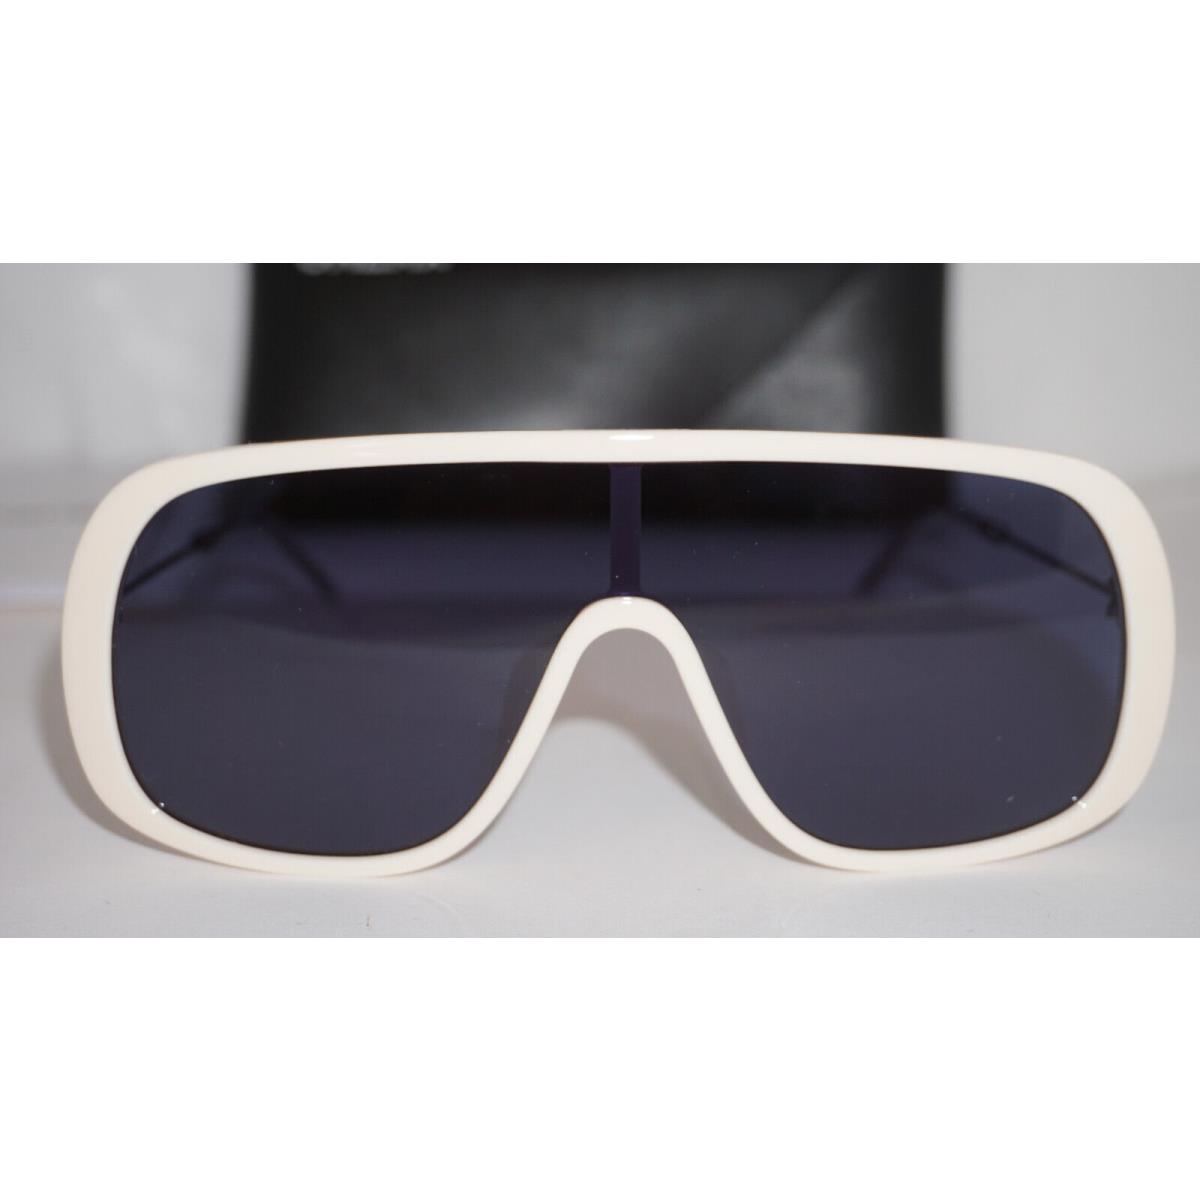 Kenzo sunglasses  - Frame: Ivory, Lens: Blue